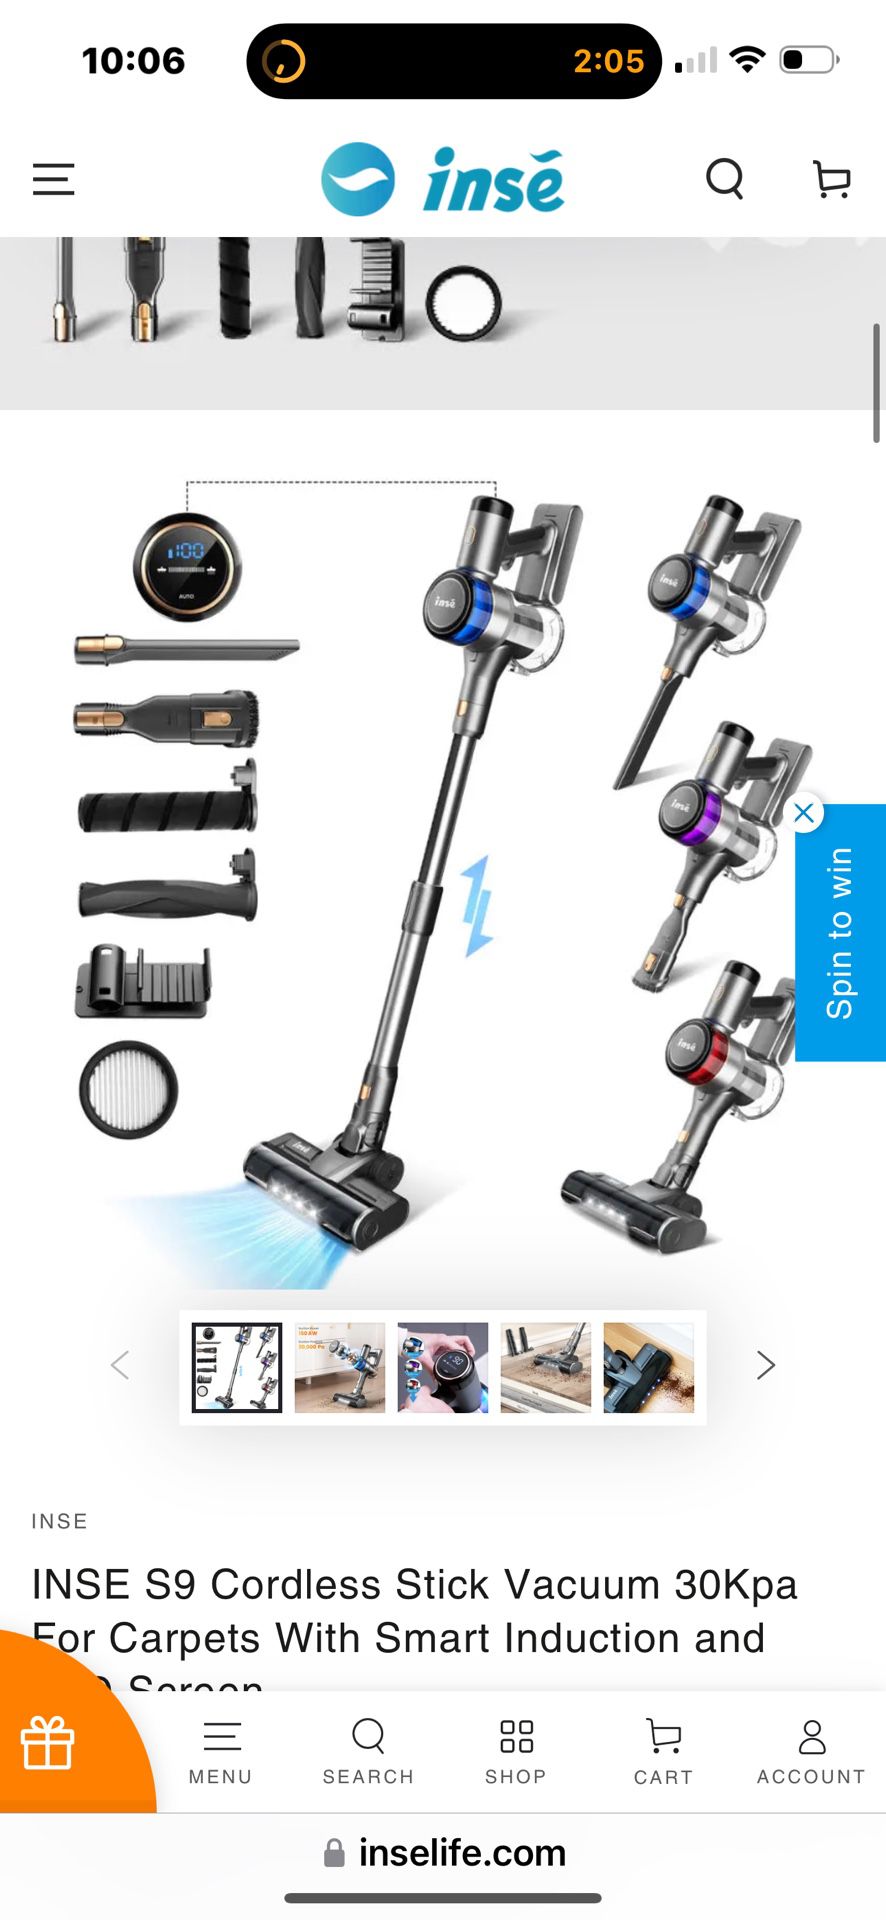 INSE S9 Cordless Stick Vacuum